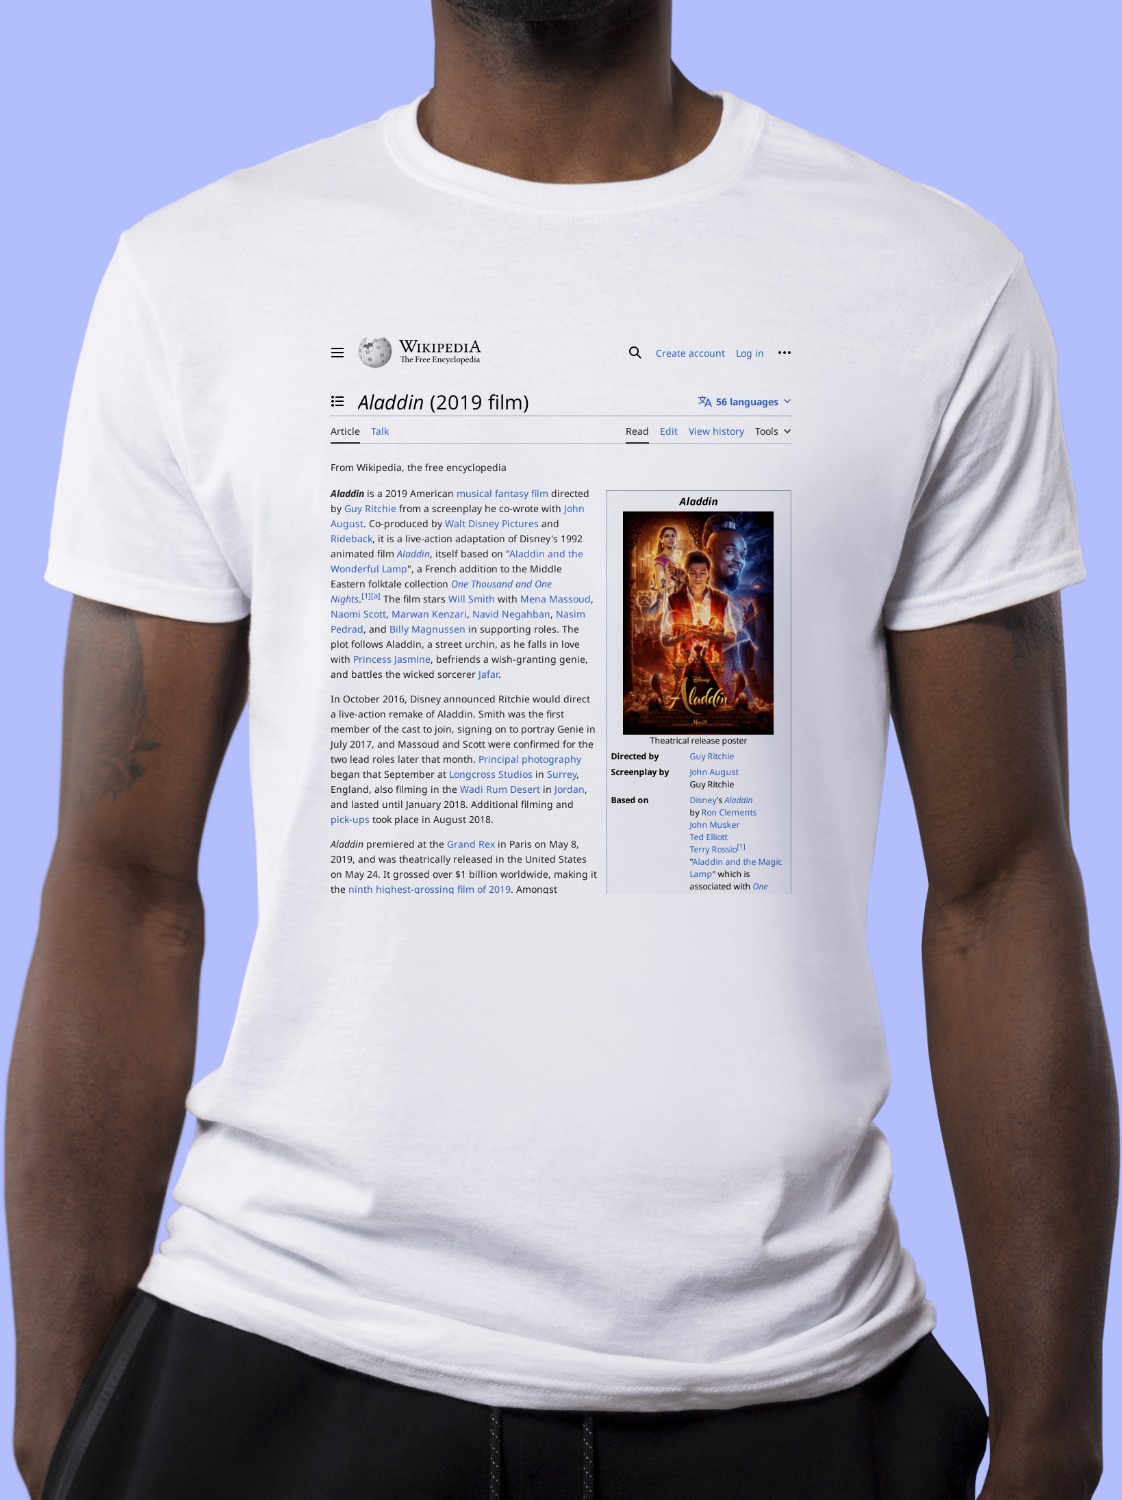 Aladdin_(2019_film) Wikipedia Shirt